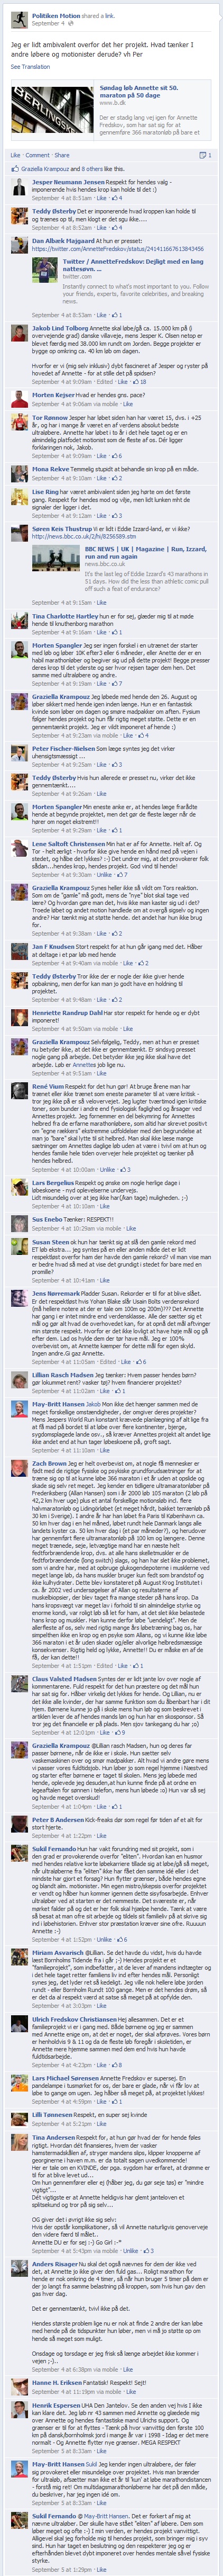 Politiken Motion (Facebook Debat) 2012.09.04